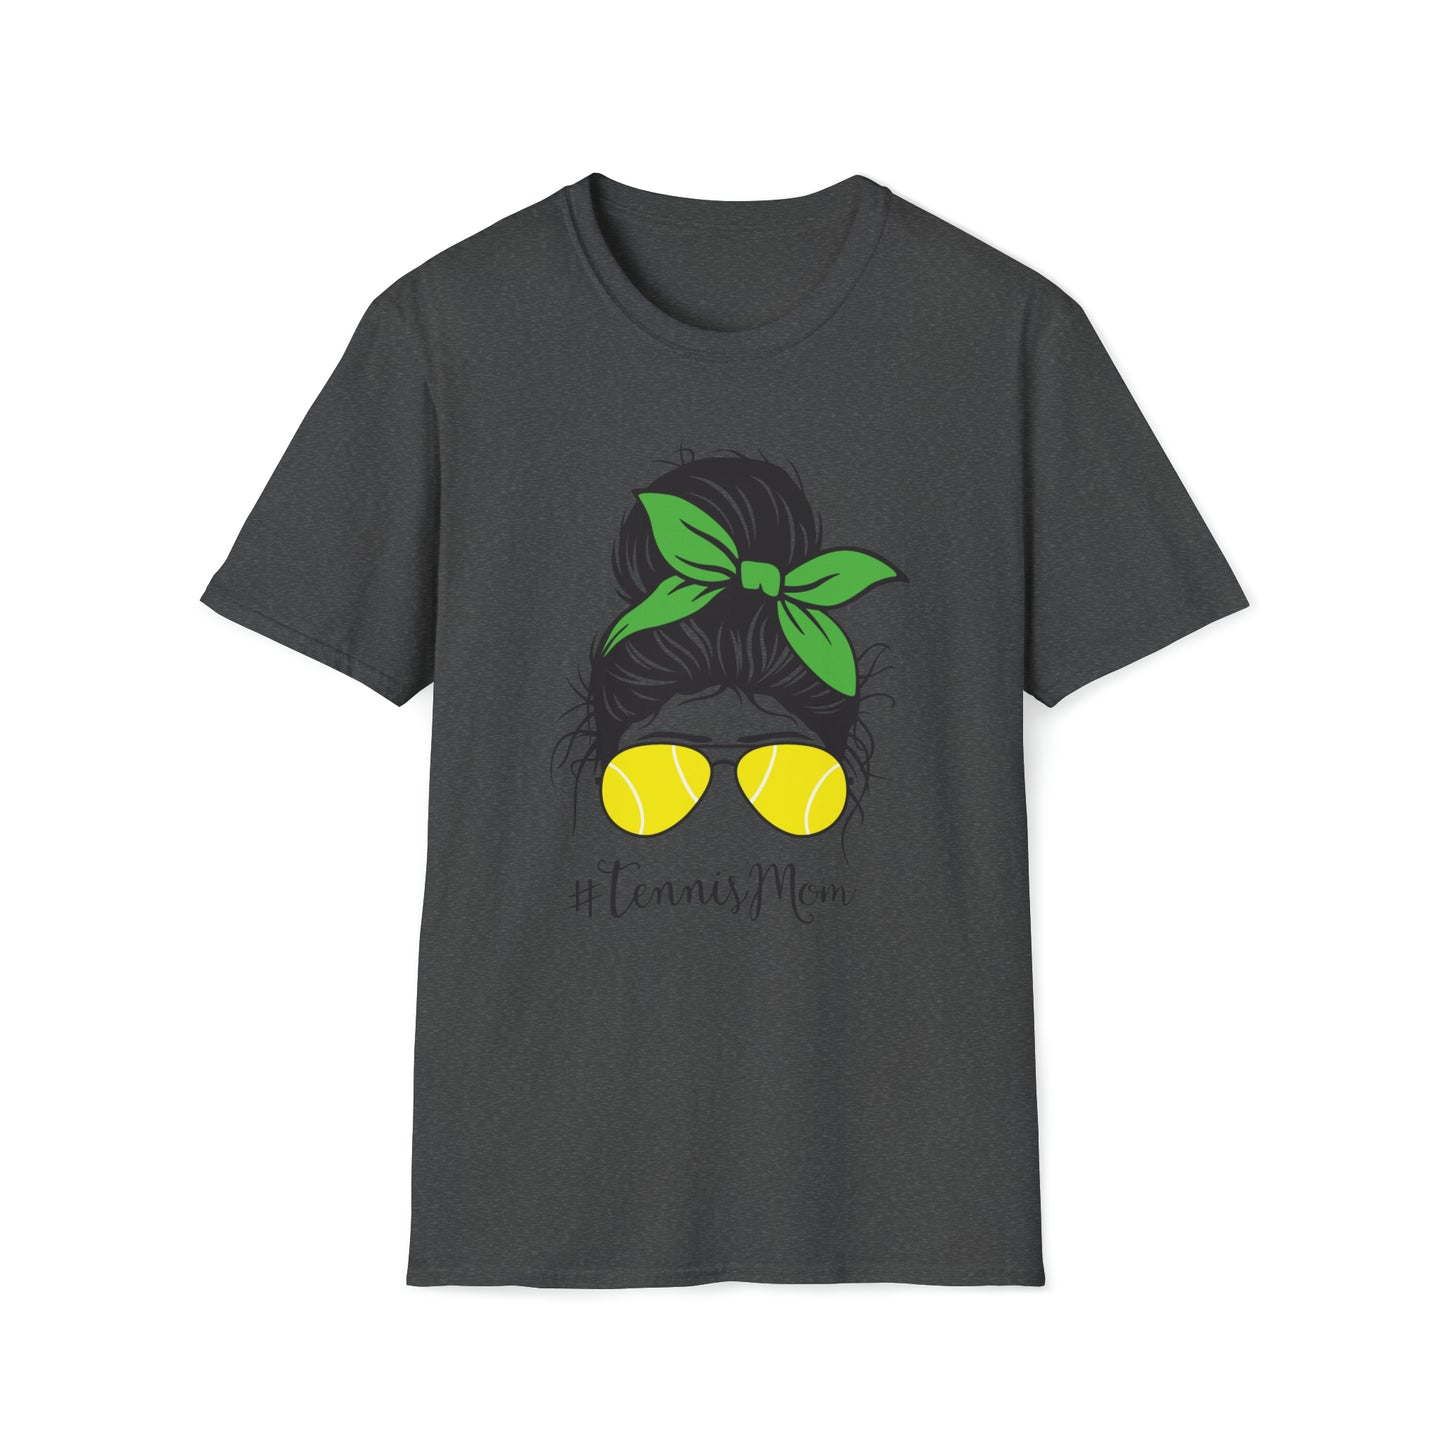 Tennis Mom - Unisex Softstyle T-Shirt